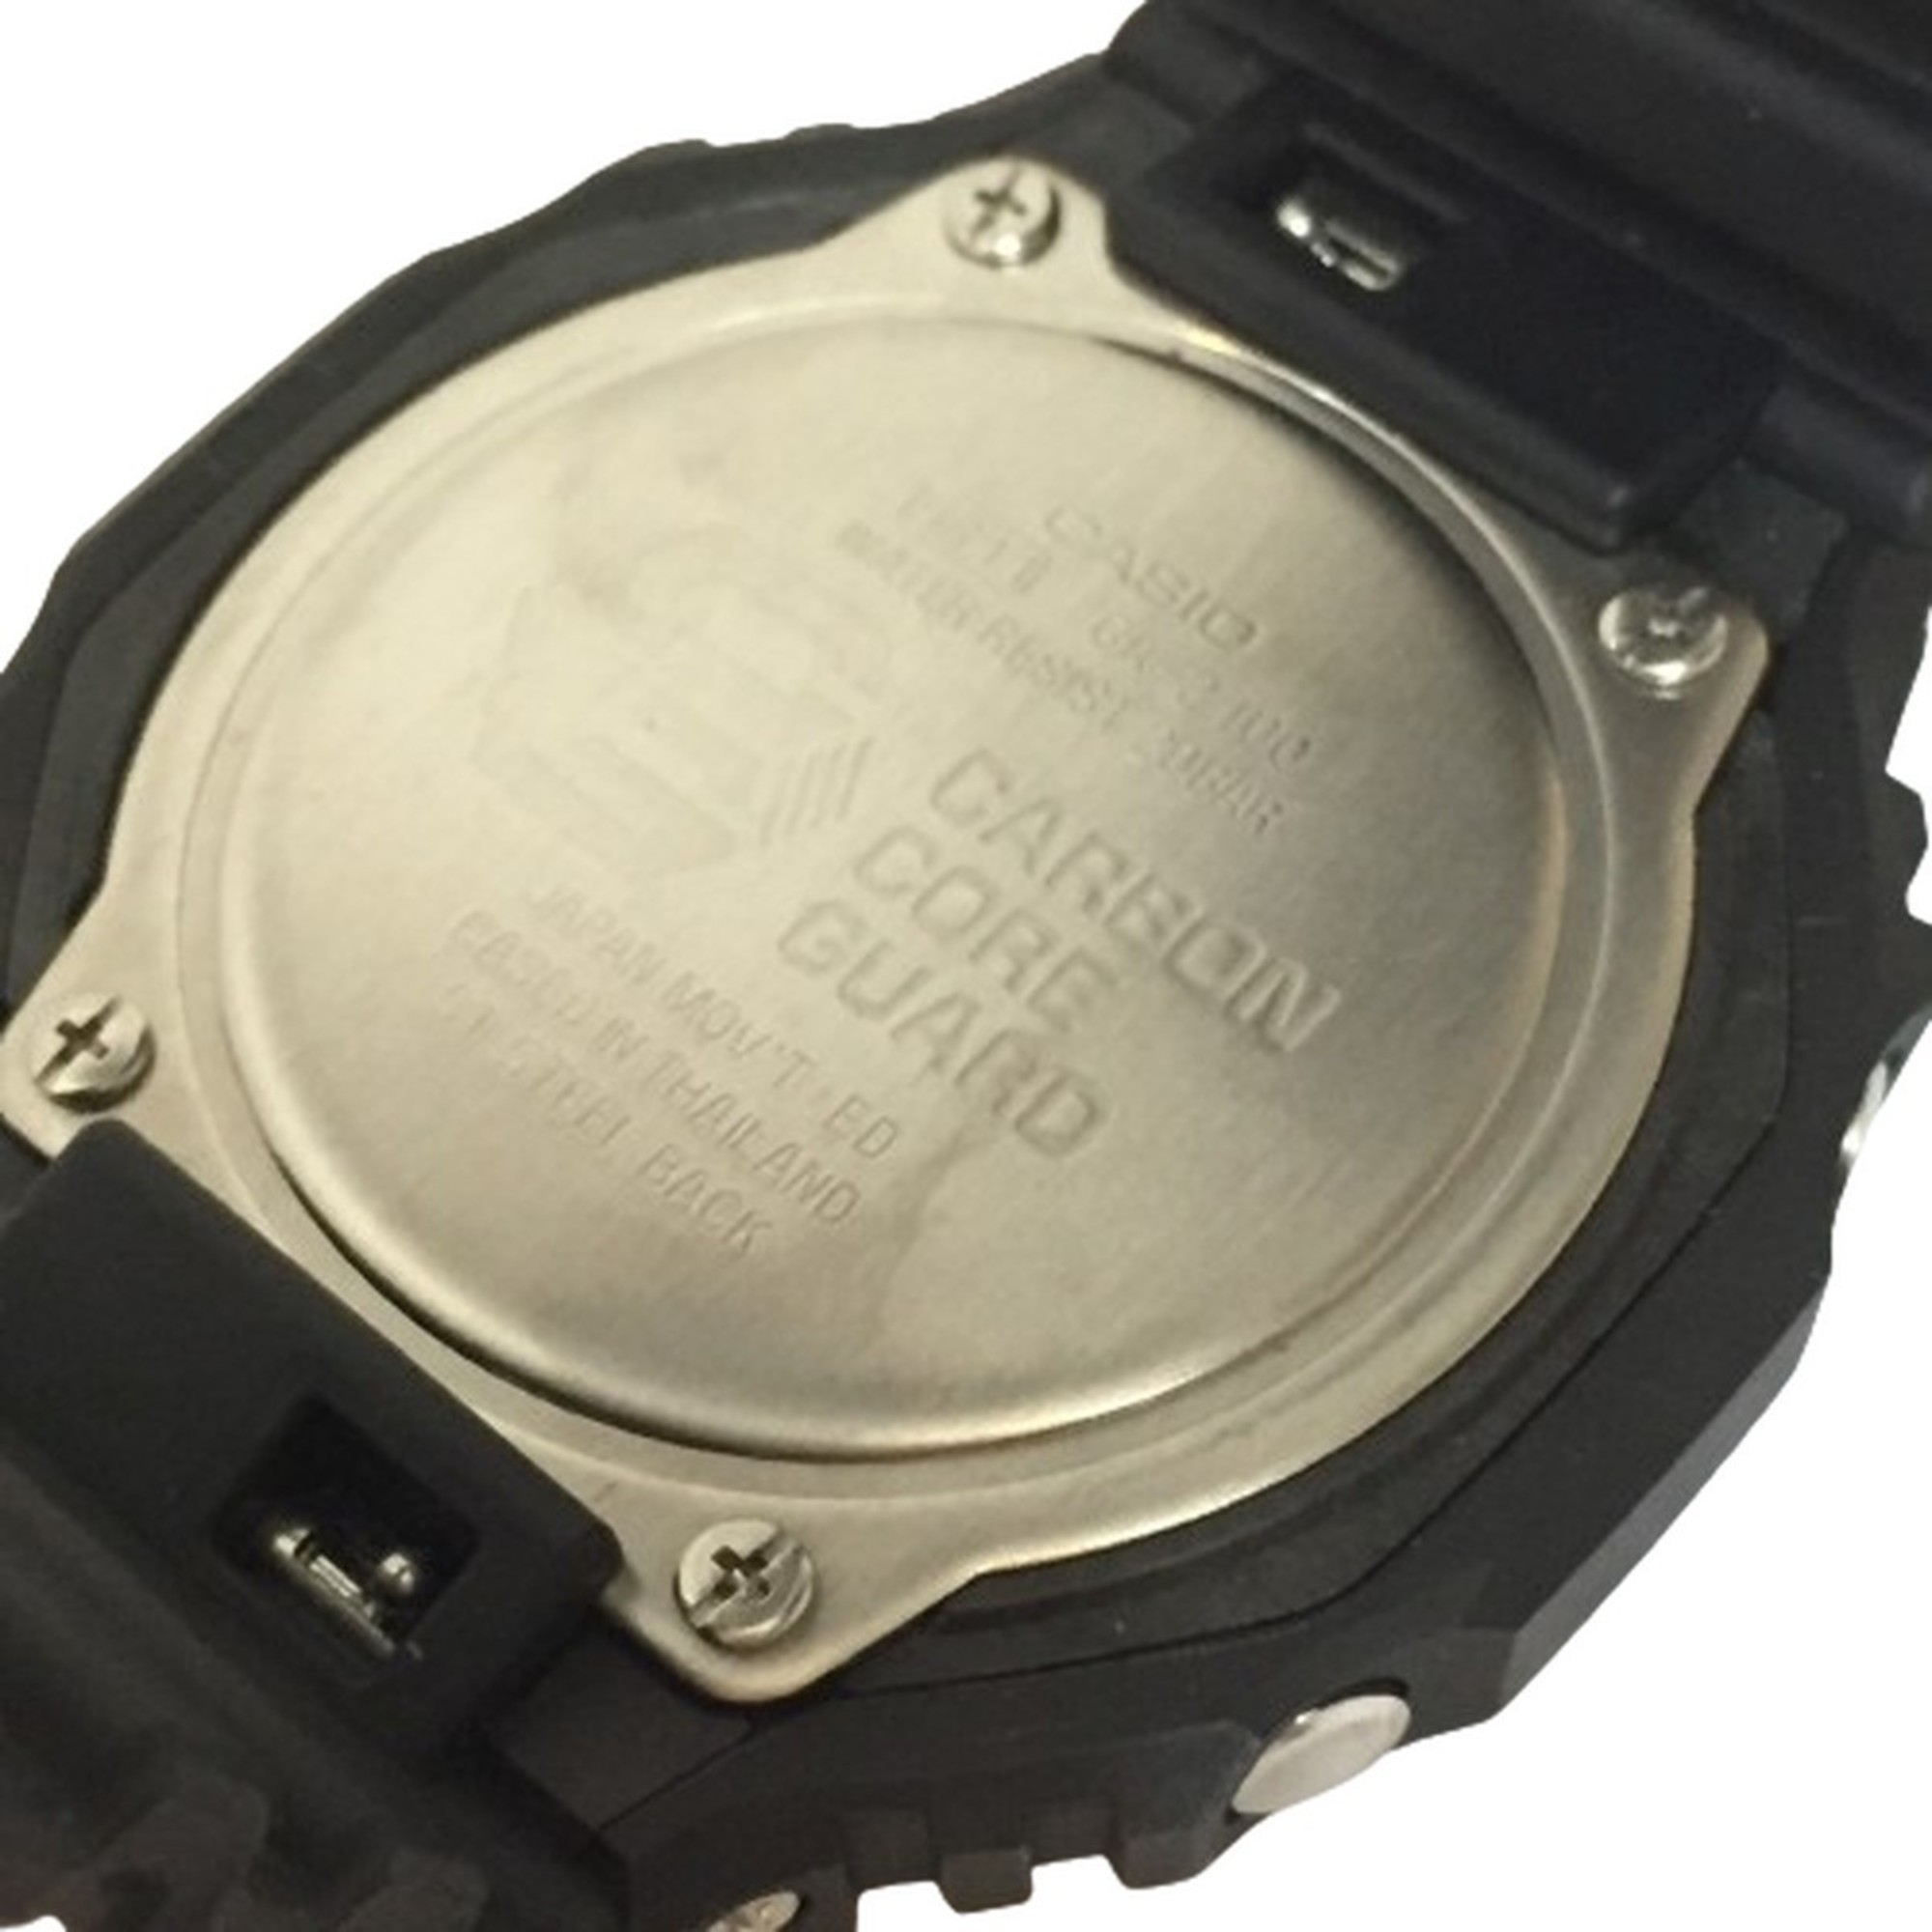 G-SHOCK CASIO GA-2100-1A1JF Octagonal Digi-Analog Quartz Men's Watch Black Kaizuka Store ITD2X6XARS30 RK1184D